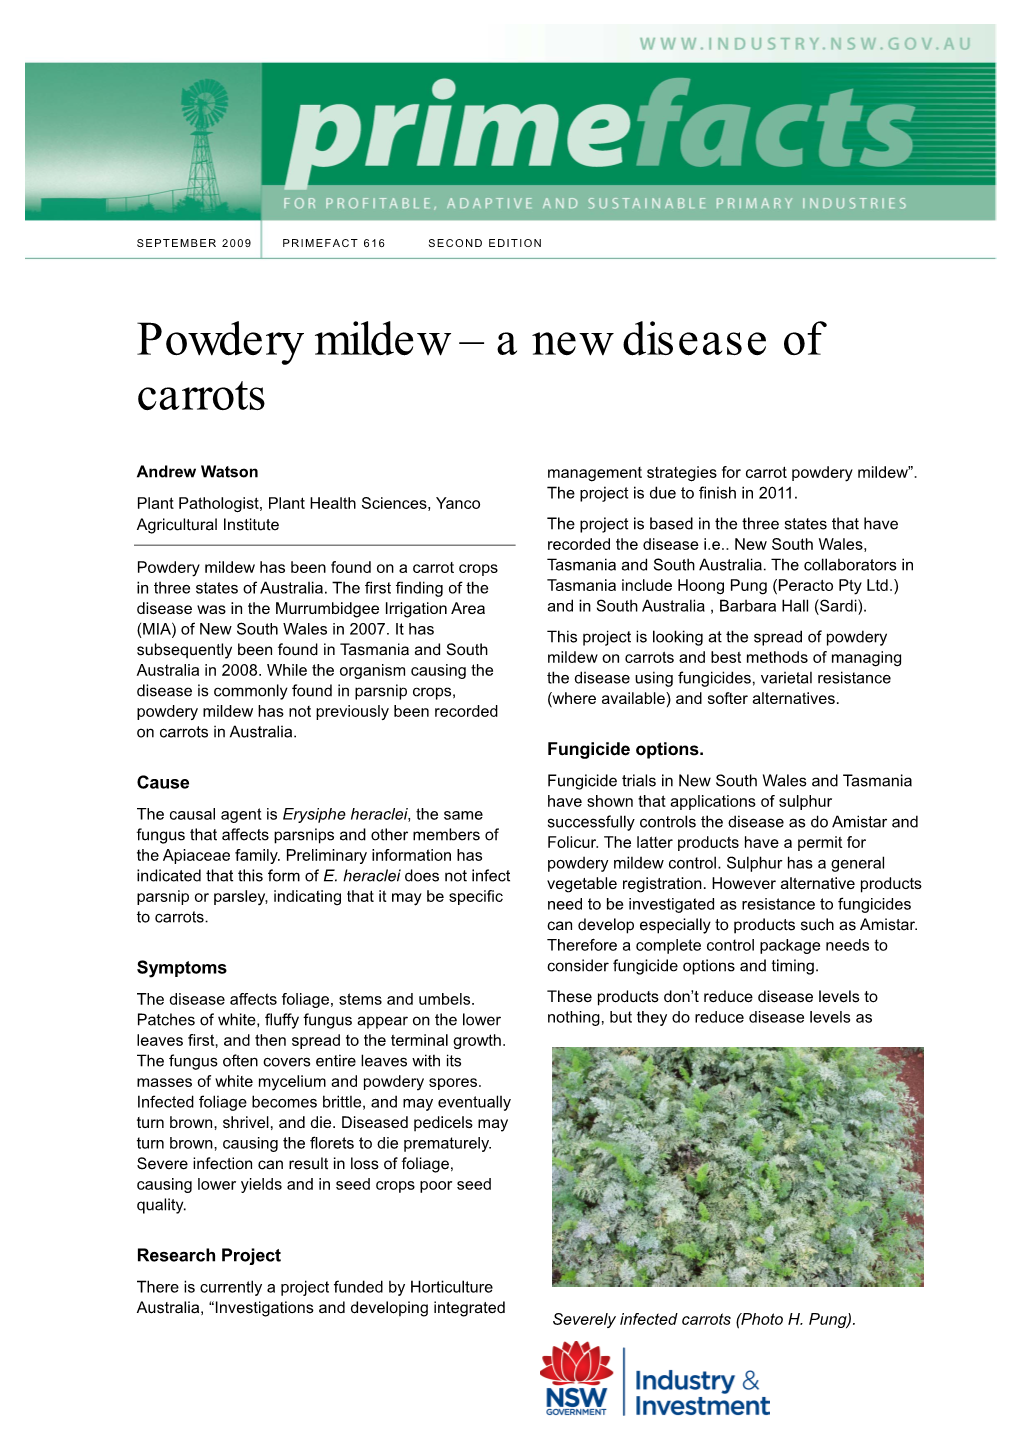 Powdery Mildew – a New Disease of Carrots